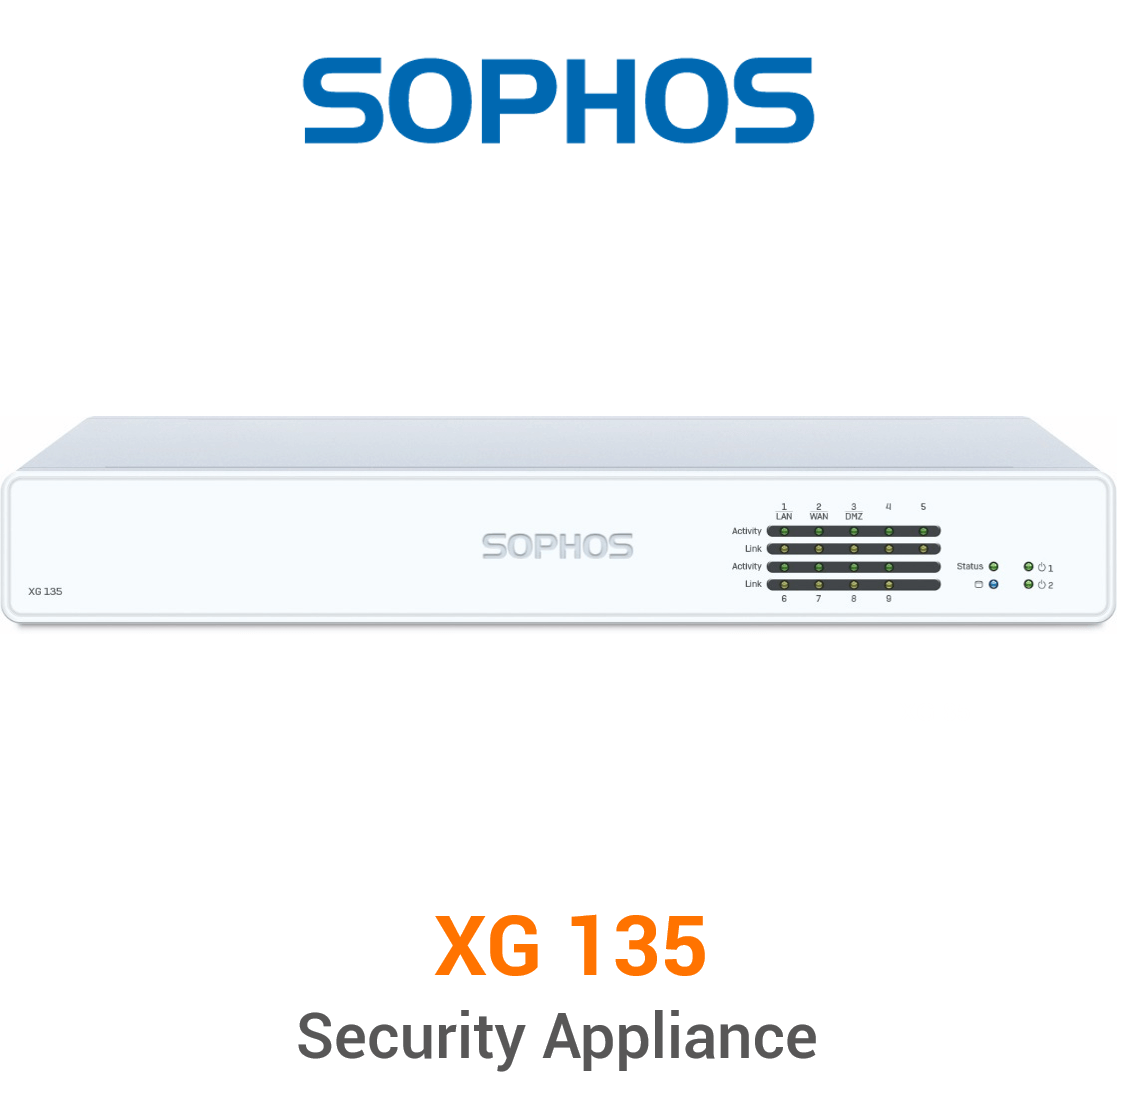 Sophos XG 135 Security Appliance